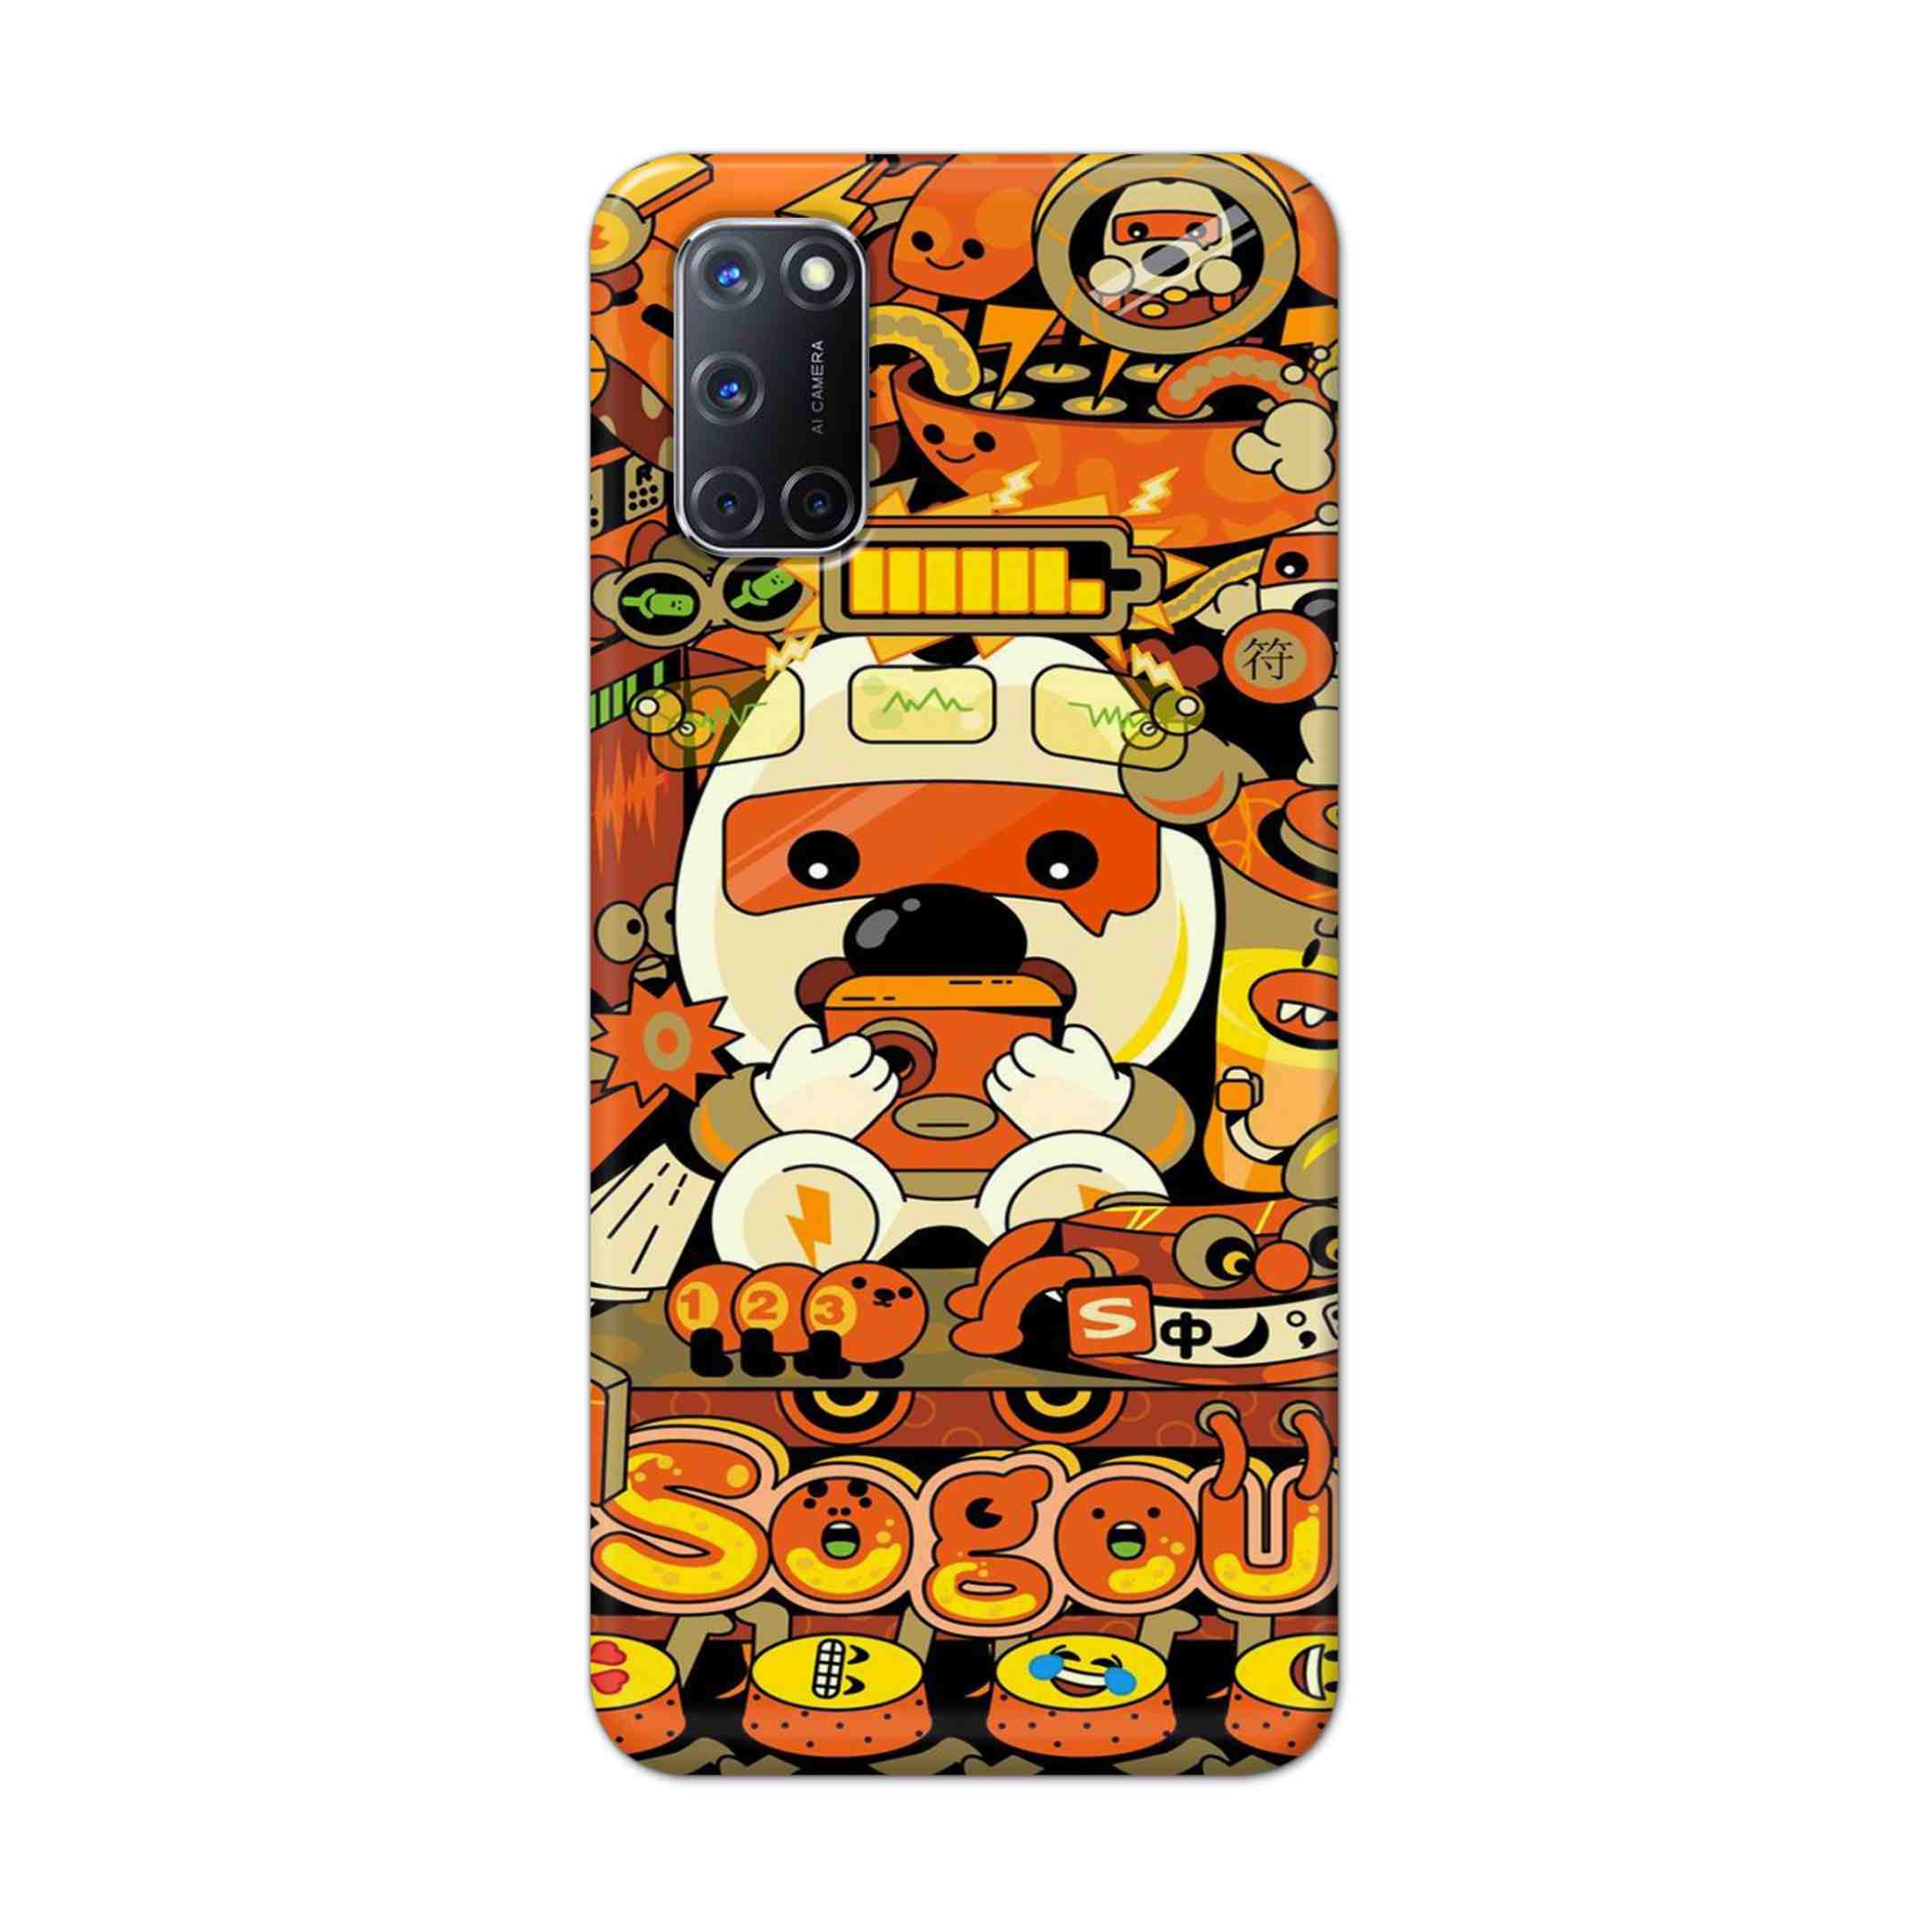 Buy Sogou Hard Back Mobile Phone Case Cover For Oppo A52 Online